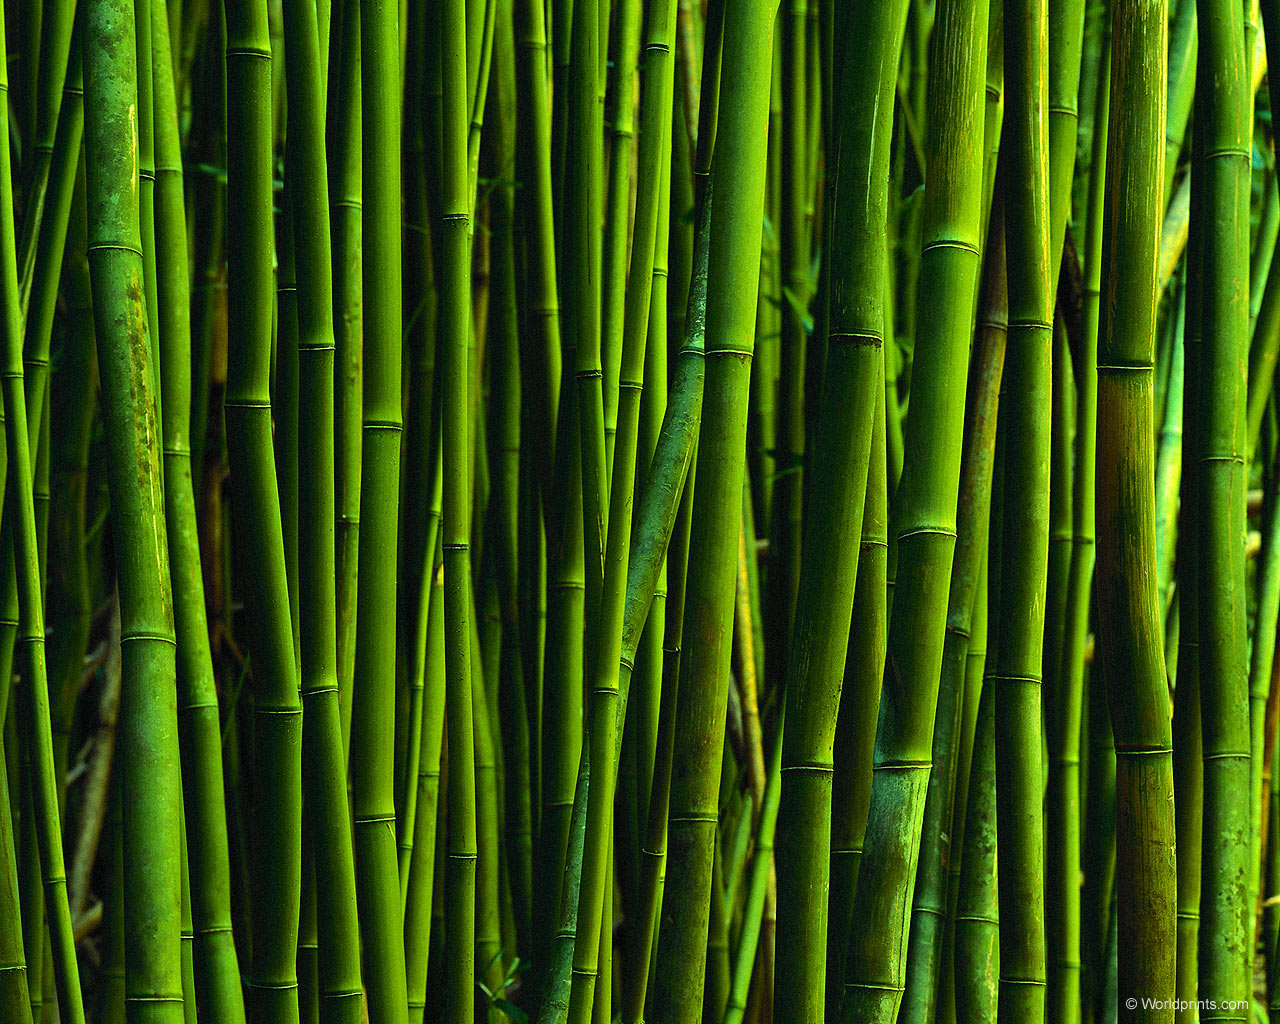 Bamboo Art